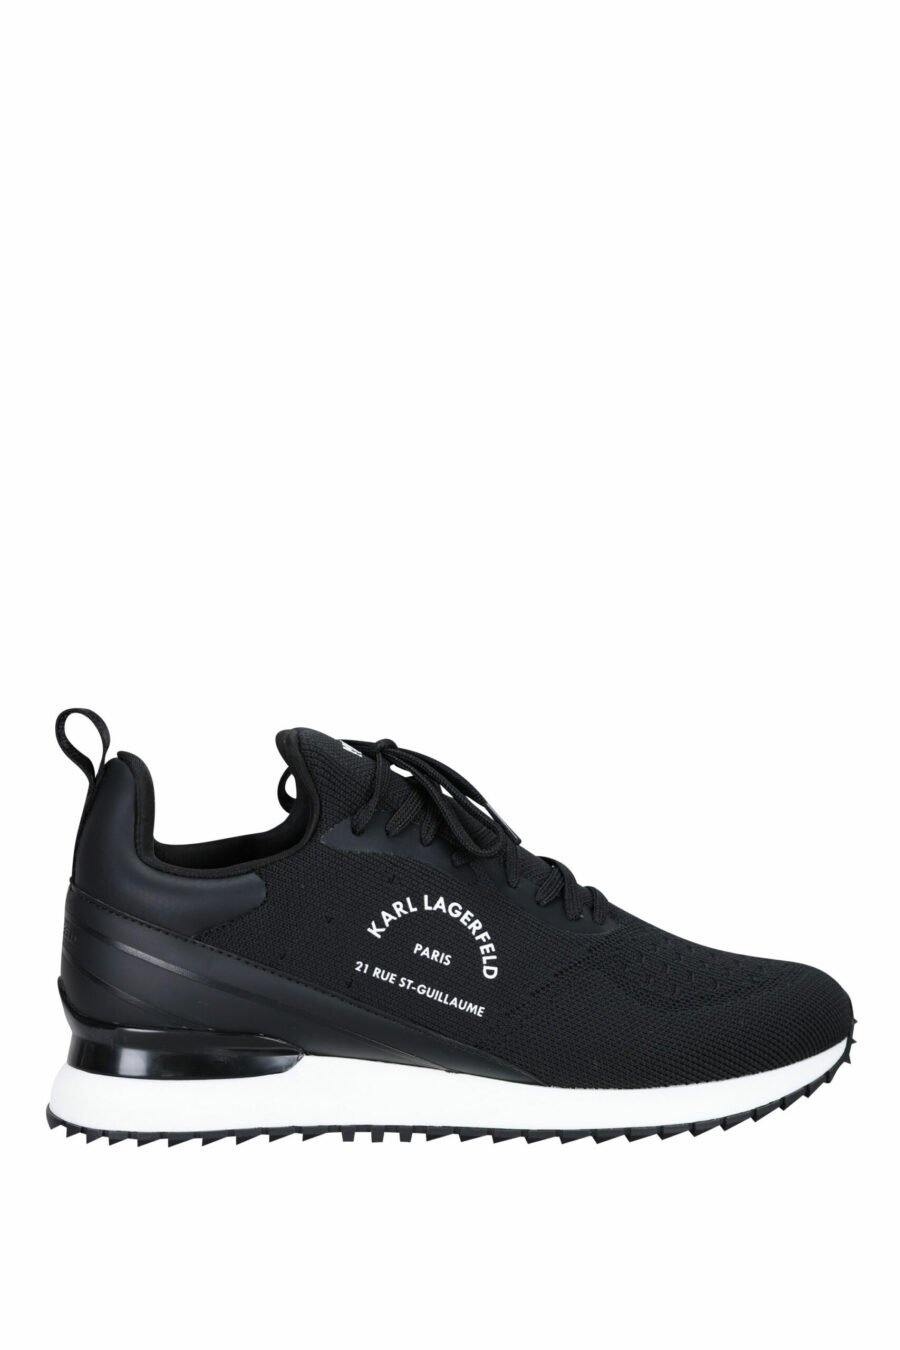 Chaussures noires "velocitor" avec logo blanc "rue st guillaume" - 5059529326370